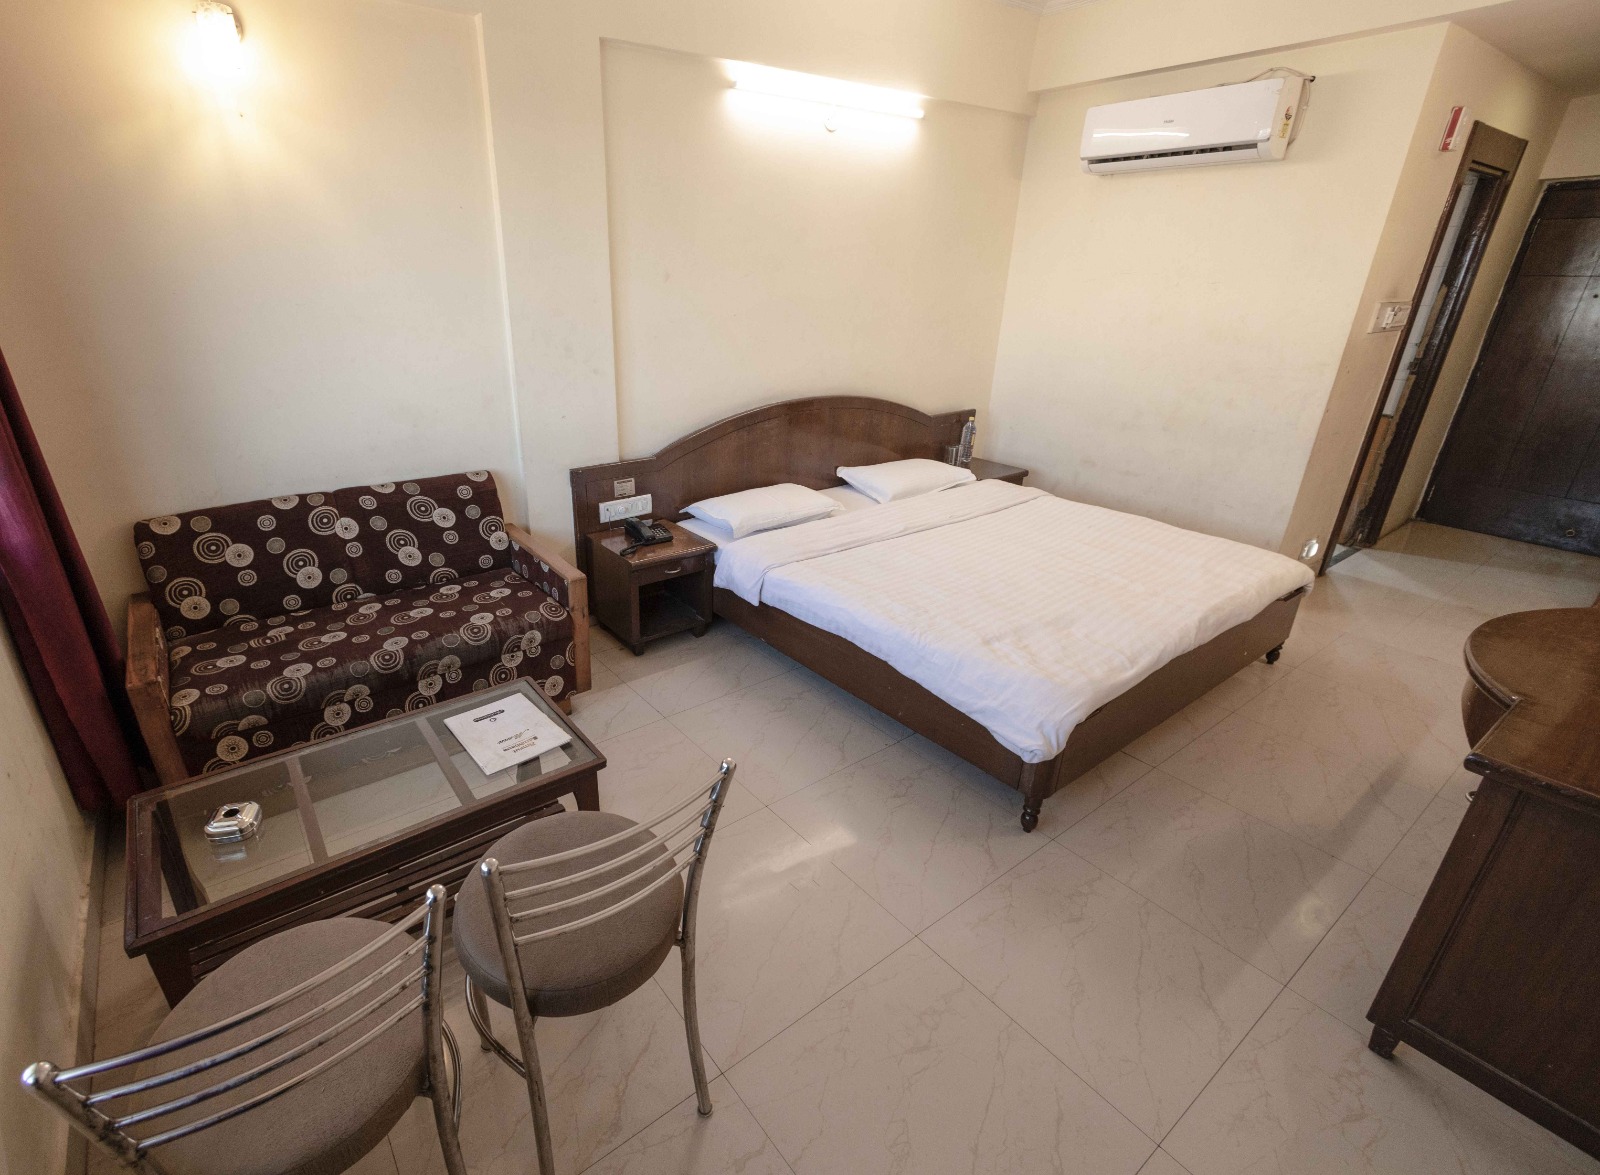 Hotels near mahakal temple in ujjain - Executive room